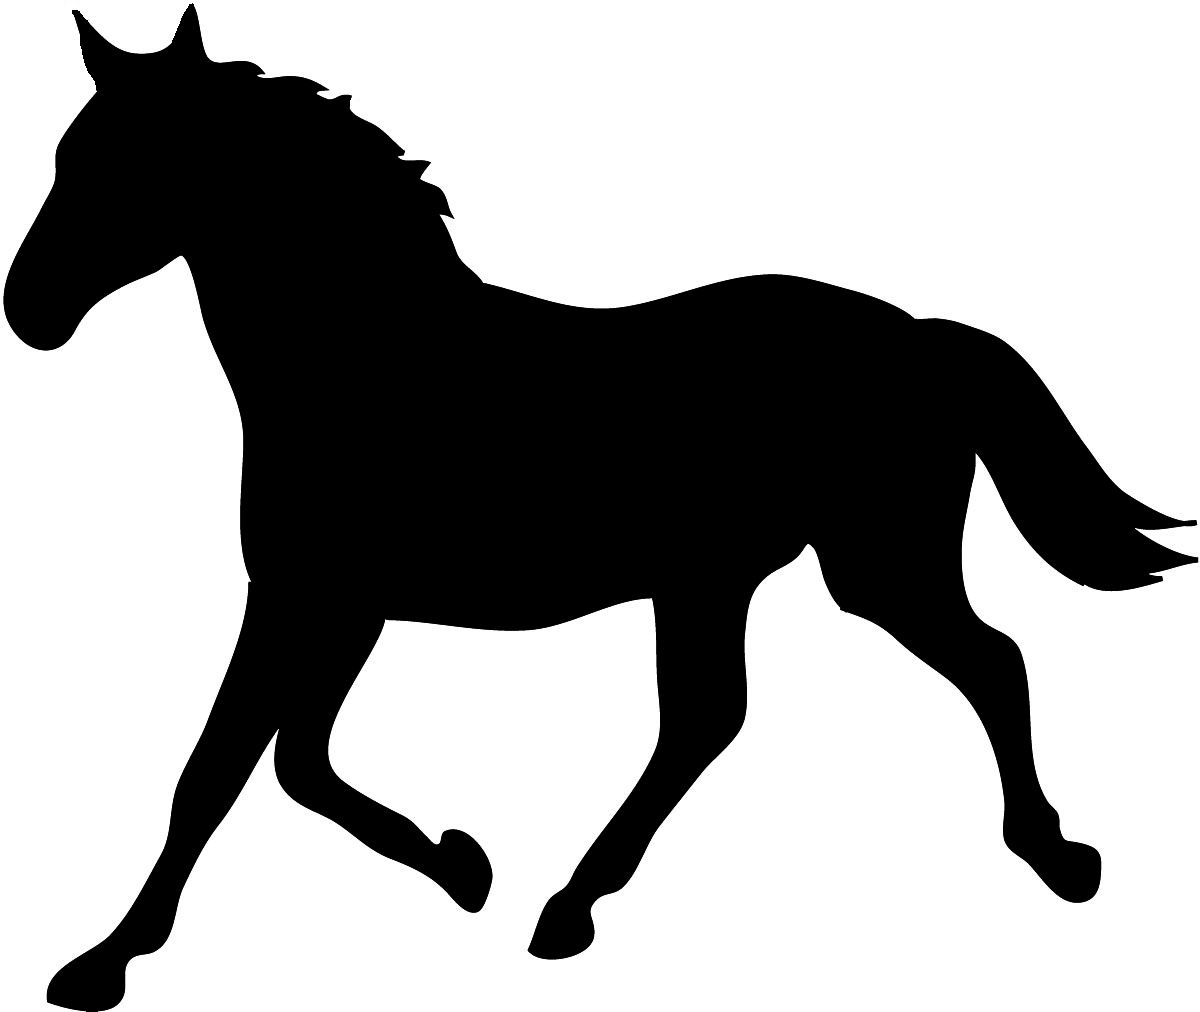 Running horse silhouette.